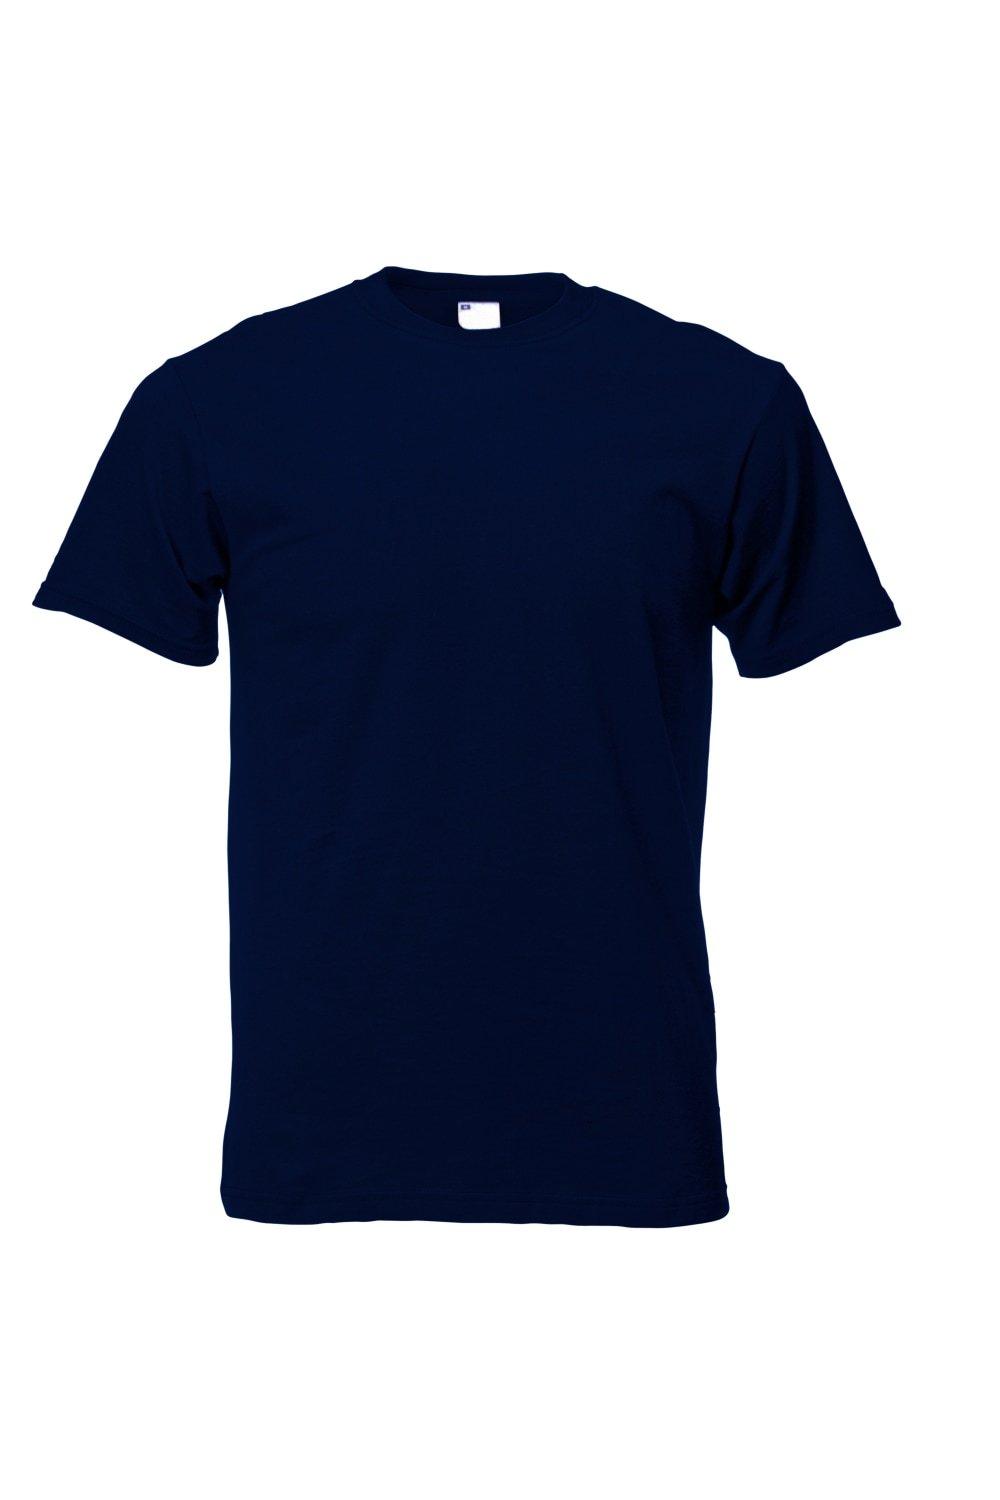 Повседневная футболка с коротким рукавом Universal Textiles, синий мужская футболка лиса русская краса xl серый меланж